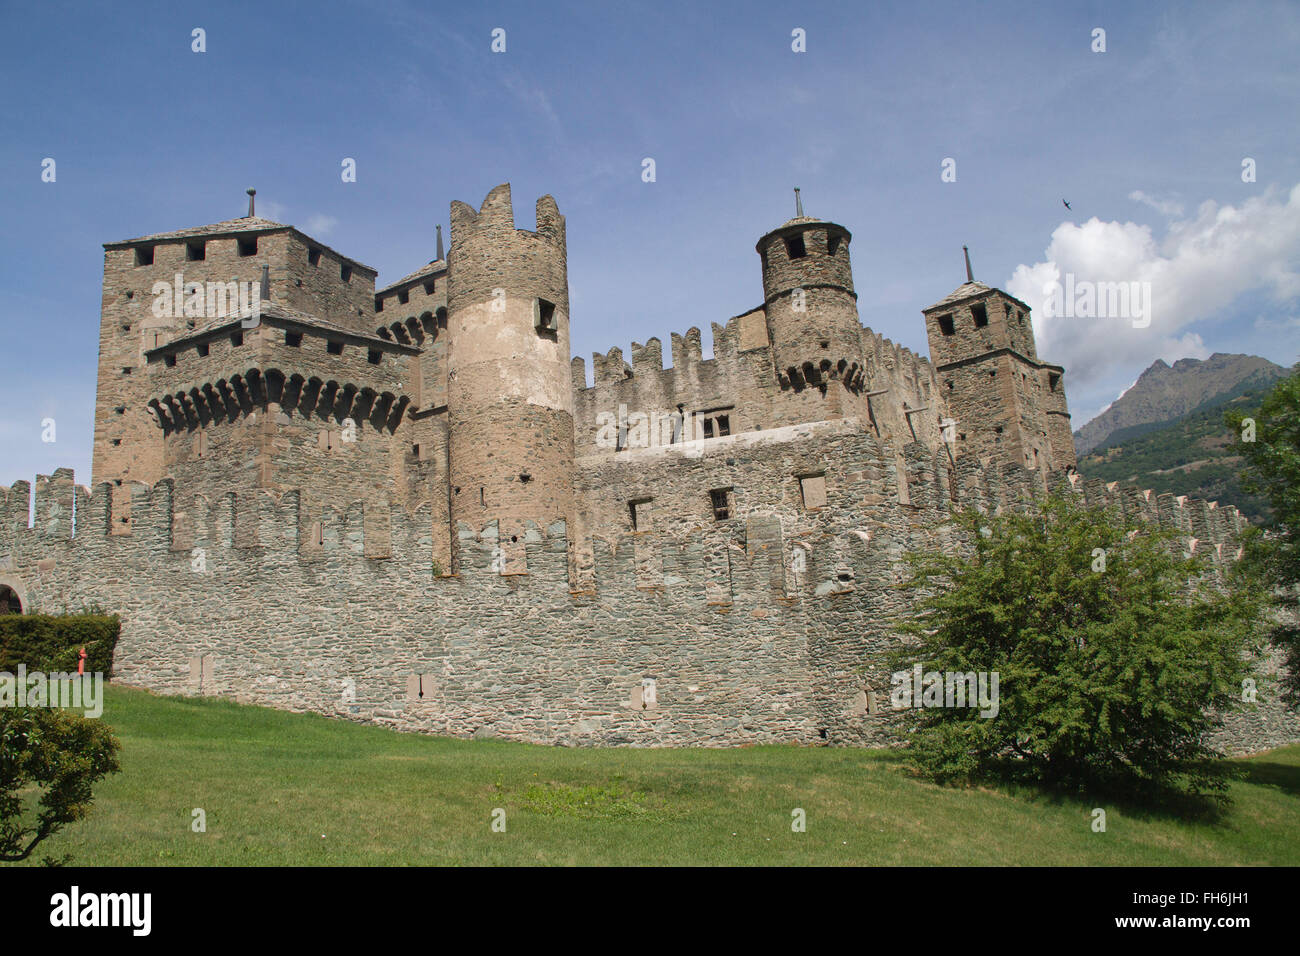 Fenis Castle (Castello di Fenis) Aosta Valley,Italy Stock Photo